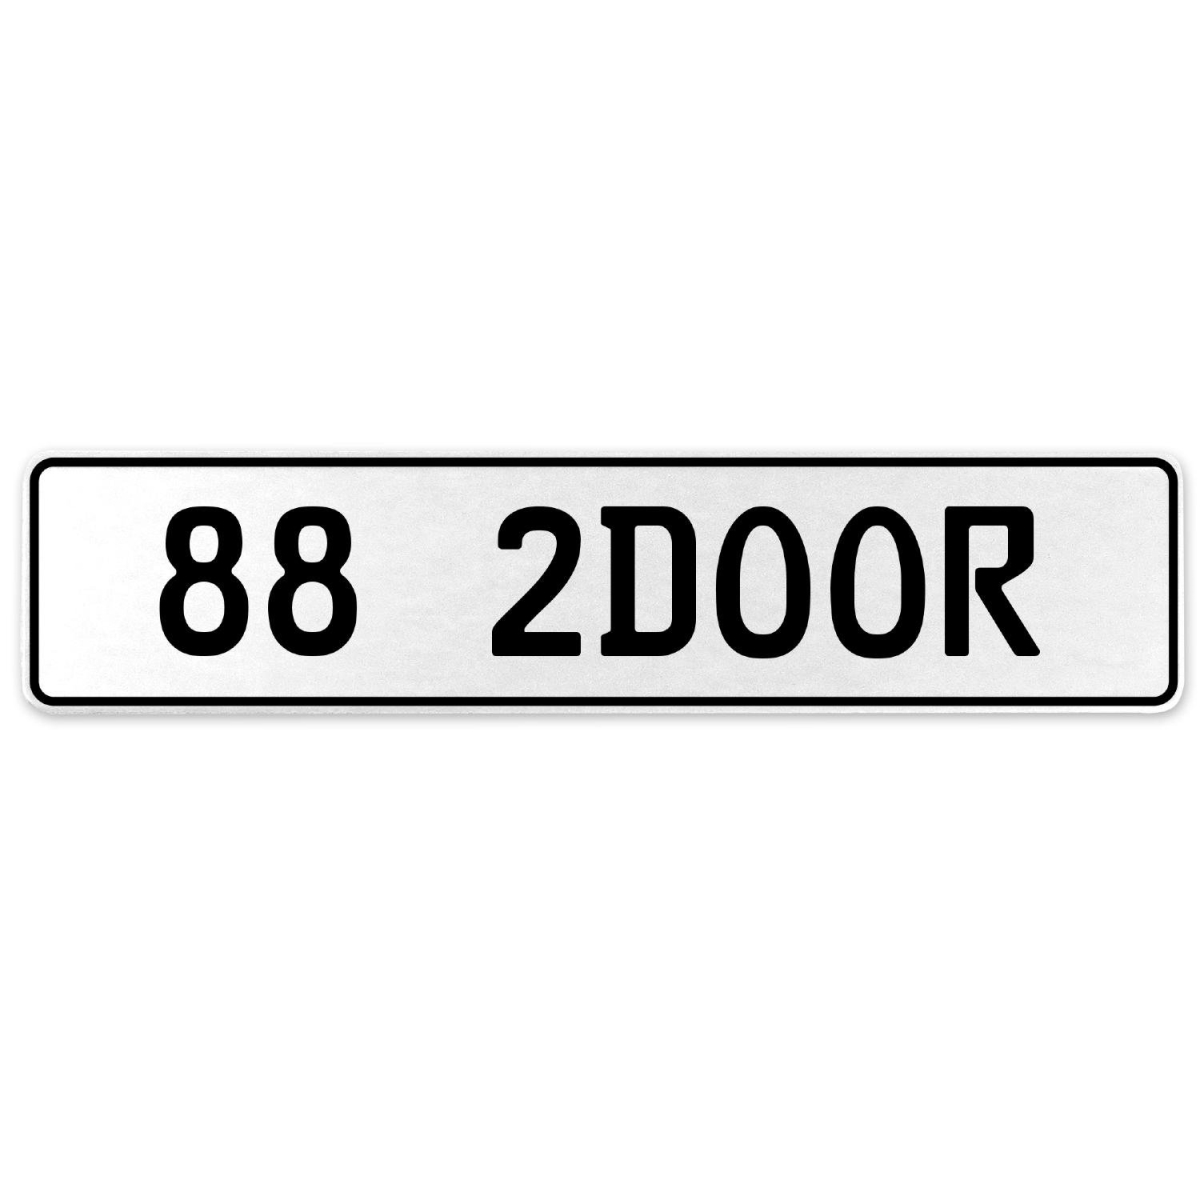 88 2door - White Aluminum Street Sign Mancave Euro Plate Name Door Sign Wall